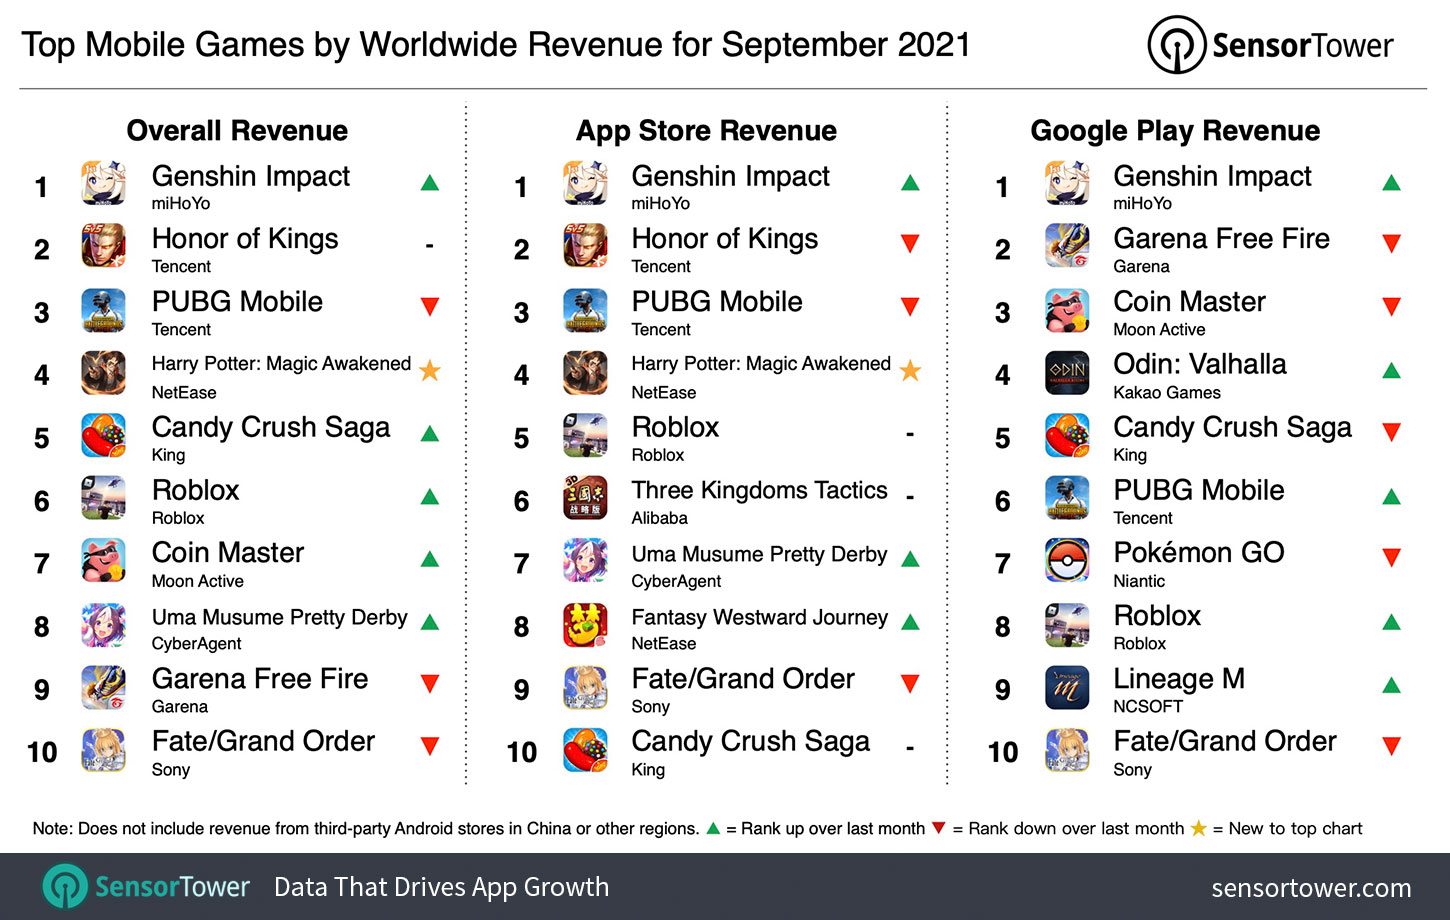 Top Grossing Mobile Games Worldwide for September 2021